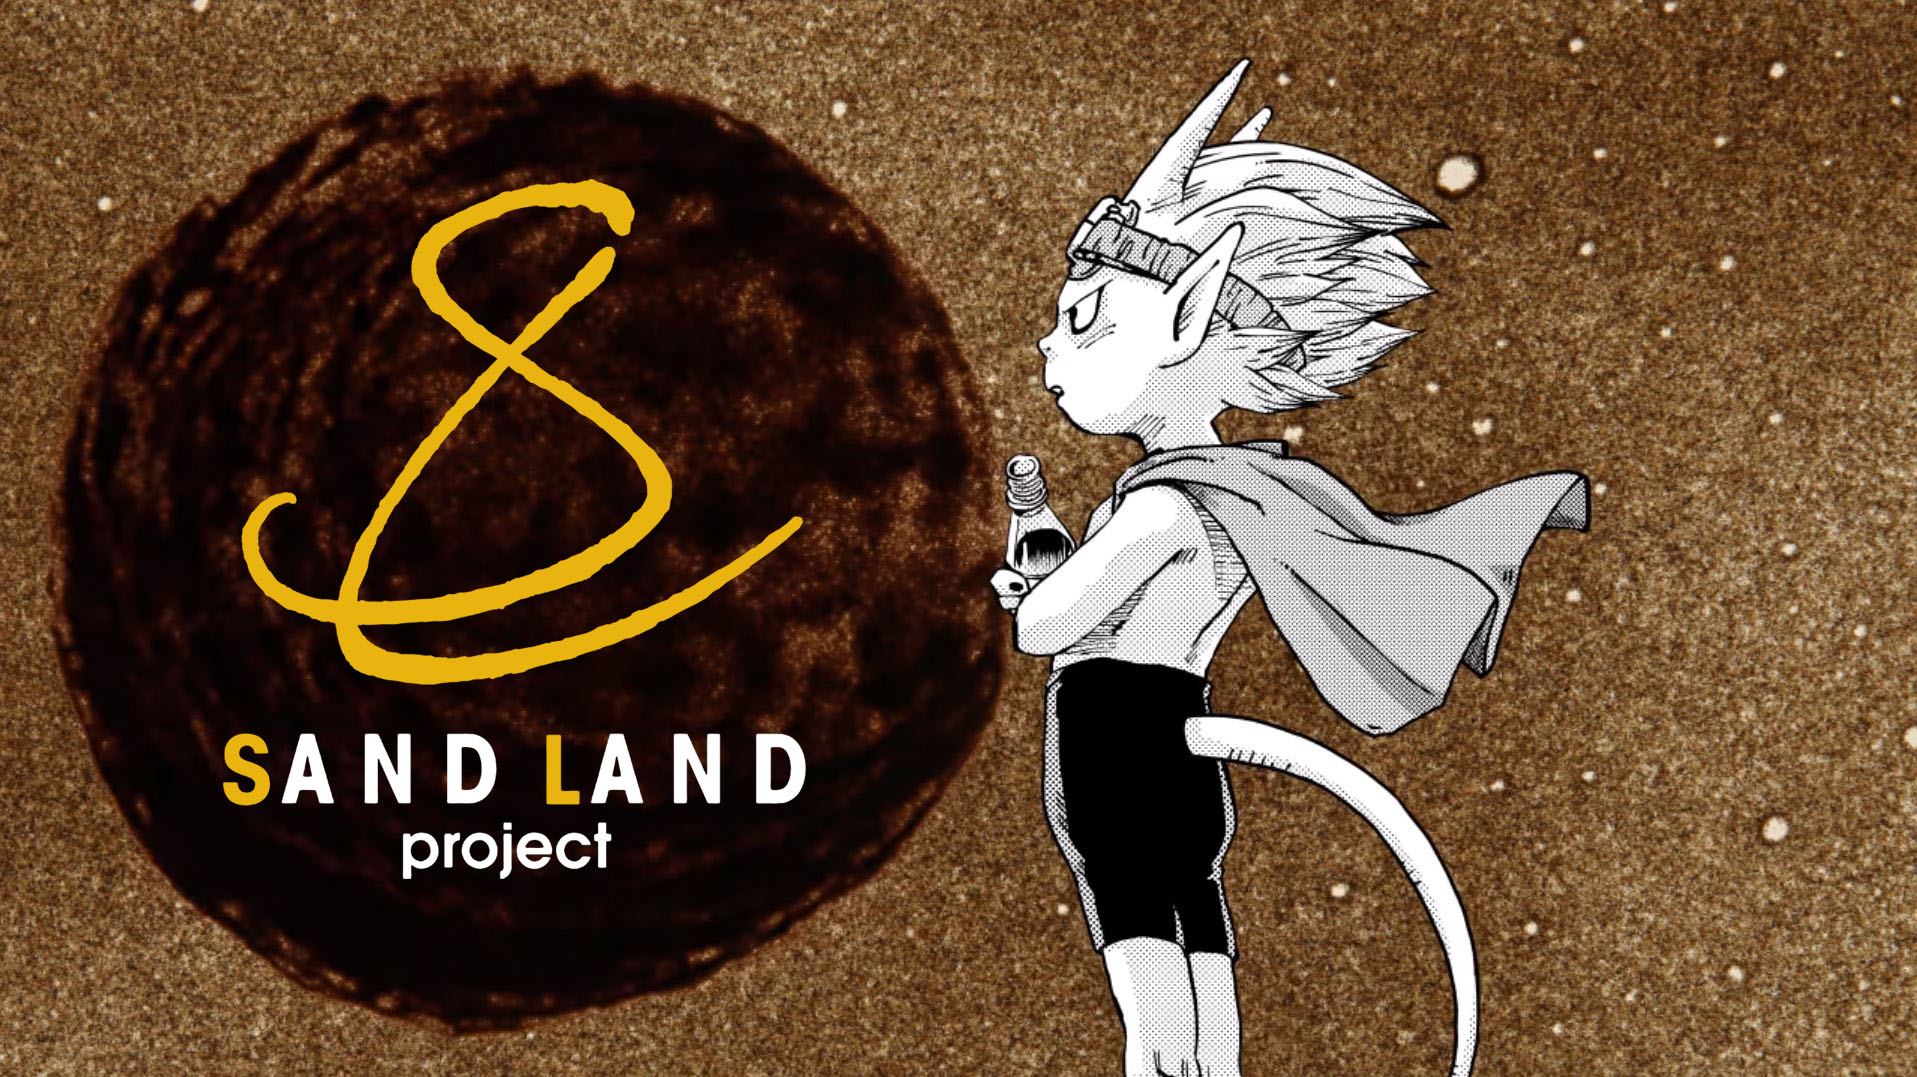 SAND LAND Project announced by Akira Toriyama and Bandai Namco